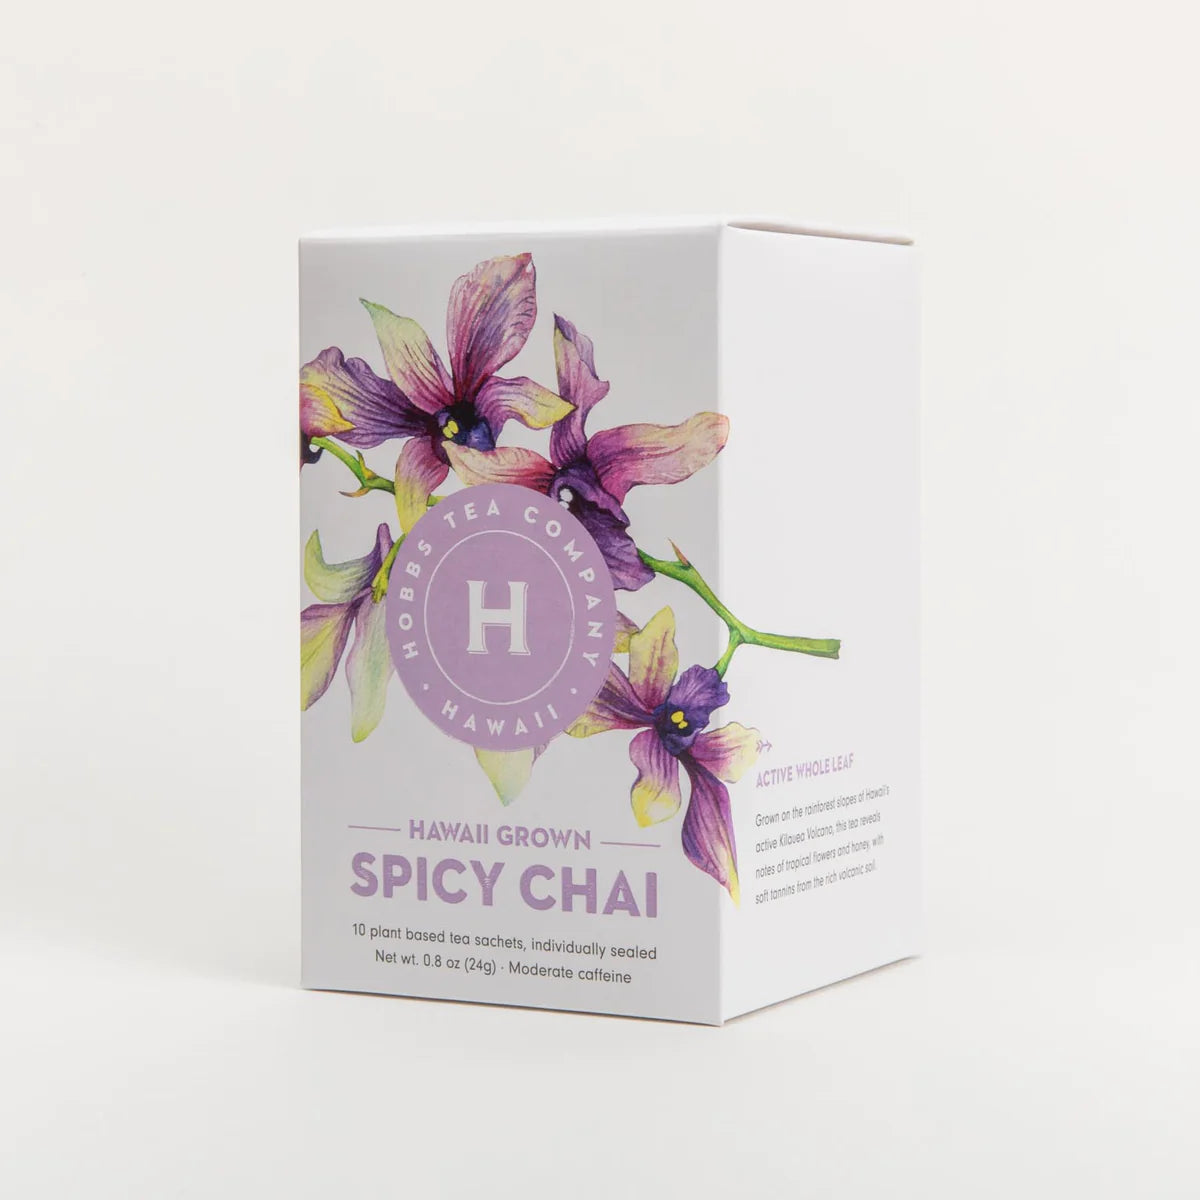 Hobbs Tea - Hawaii Grown Spicy Chai